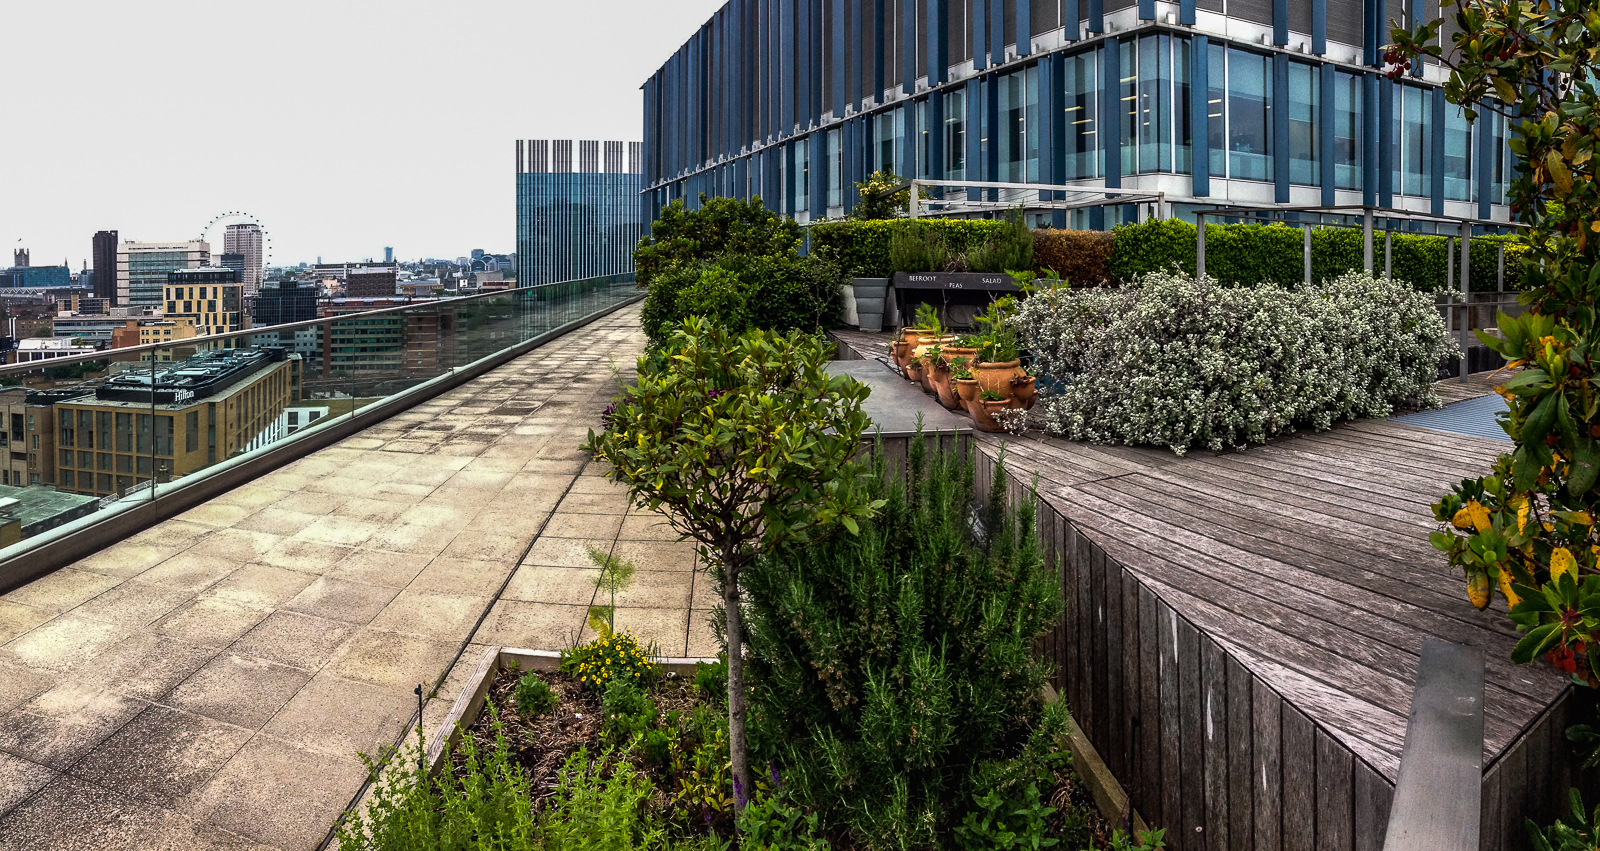 20160603_Southwark_Blue-Fin-Building_Vegetable-Garden